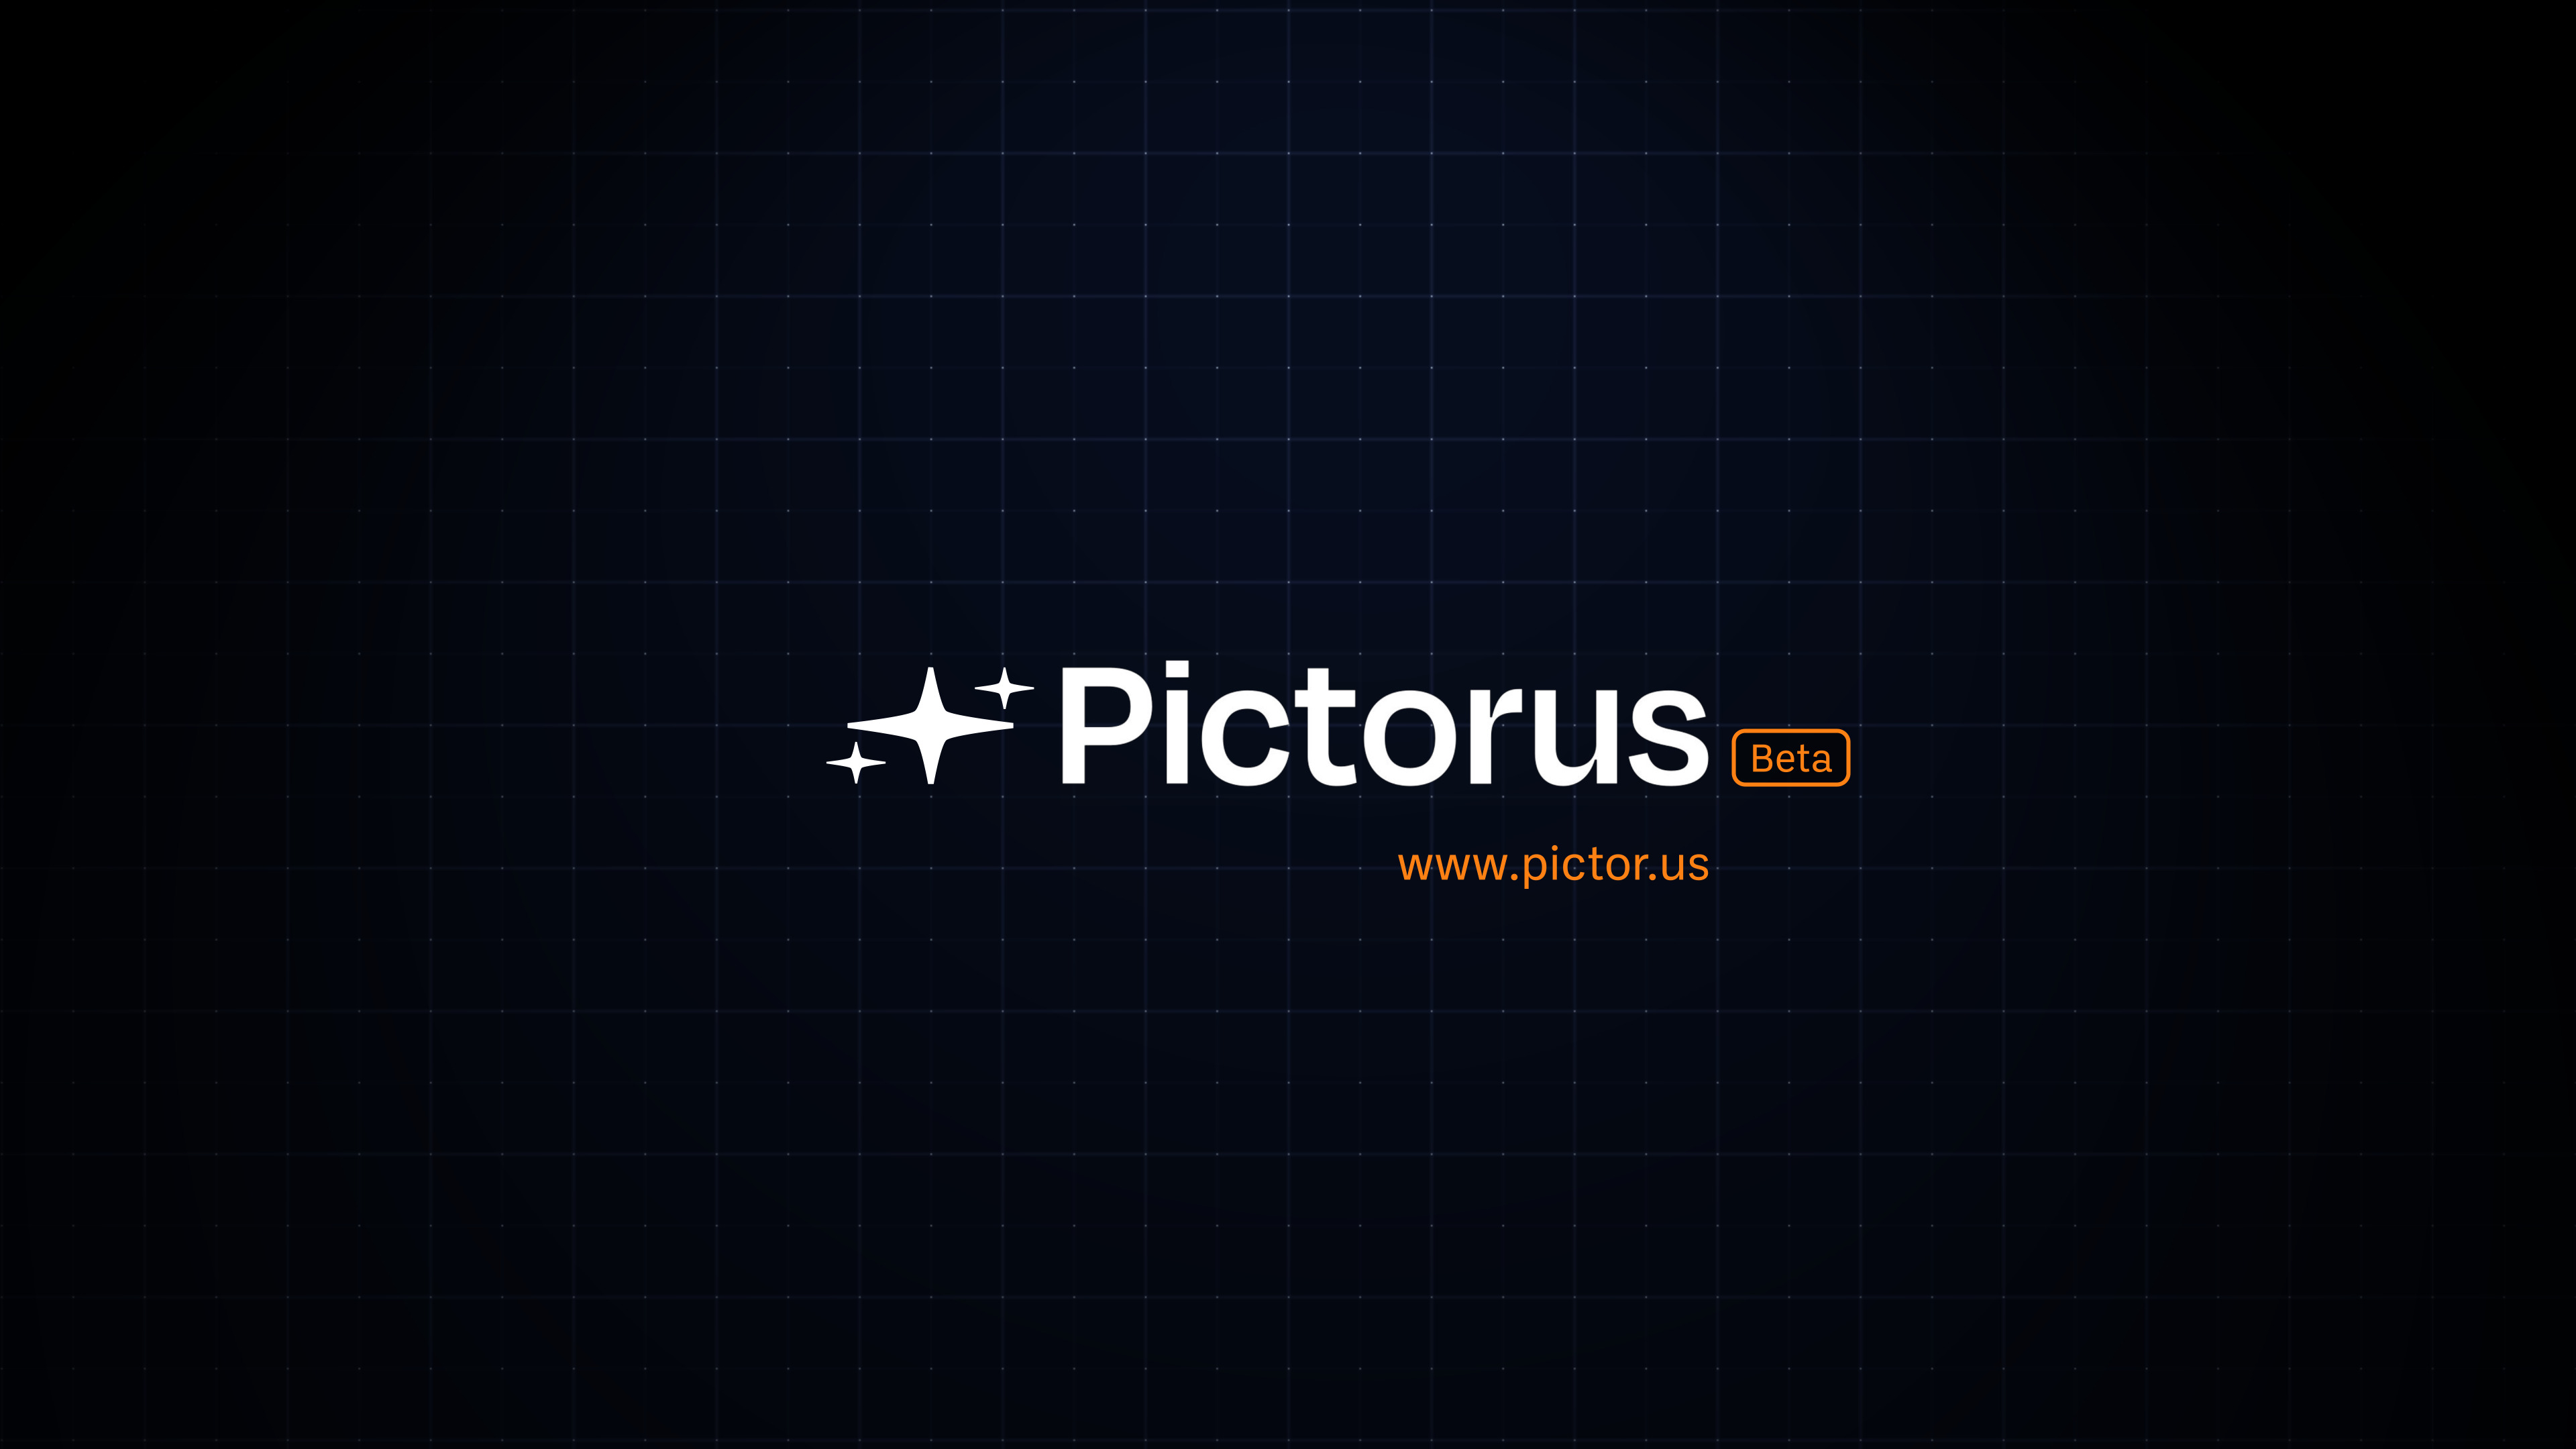 Welcome to Pictorus Beta!